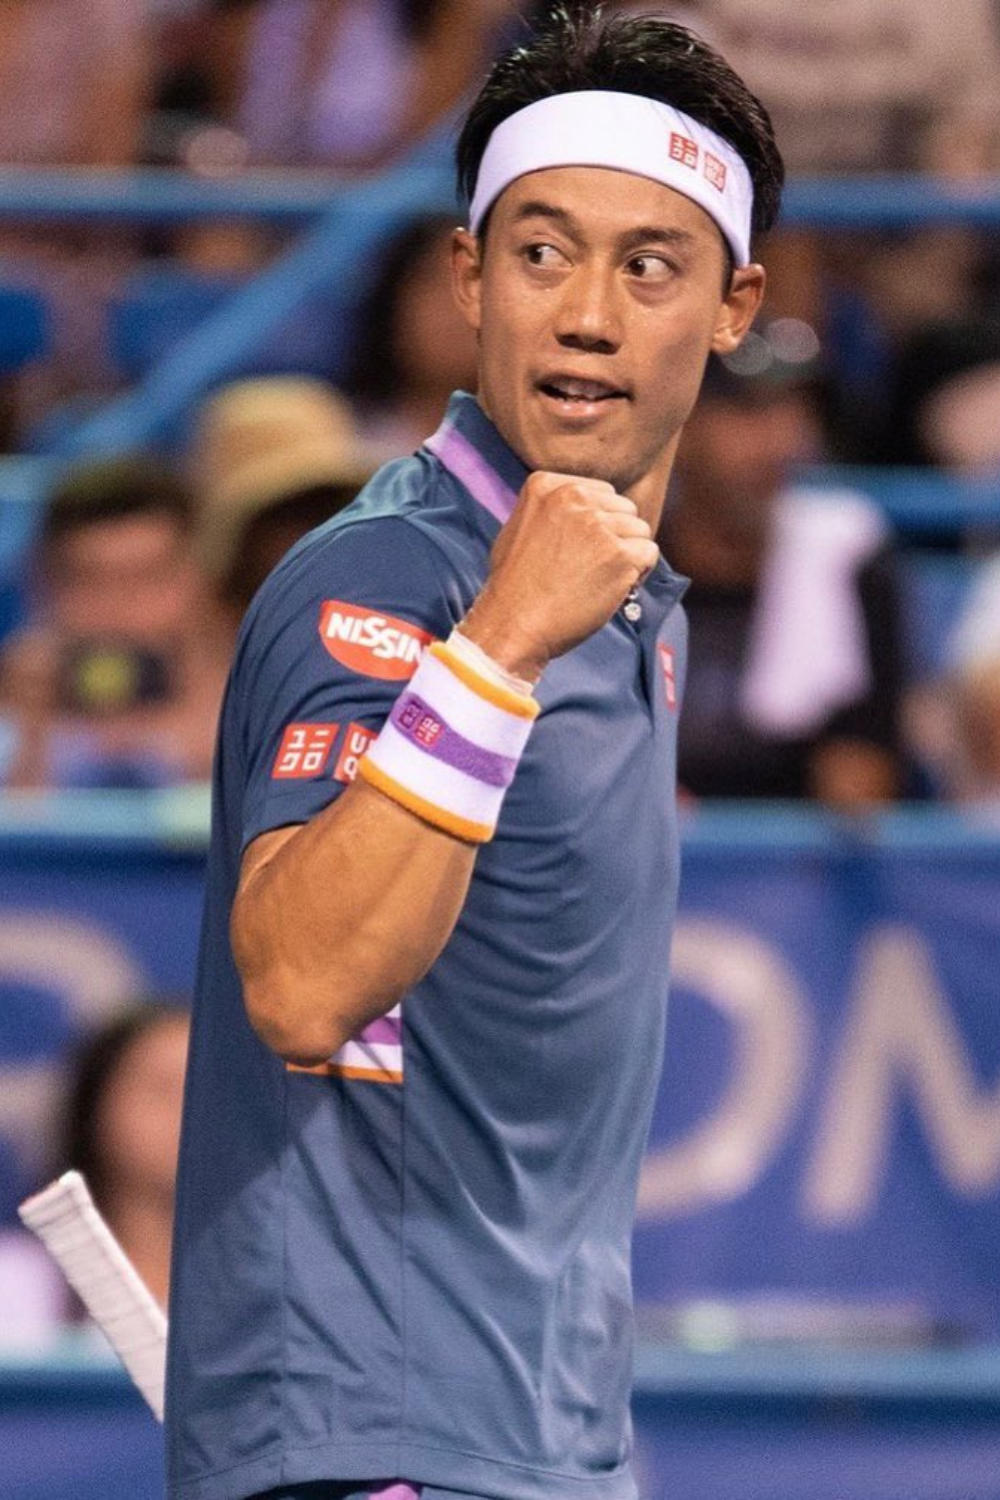 Kei Nishikori, A Professional Tennis Player